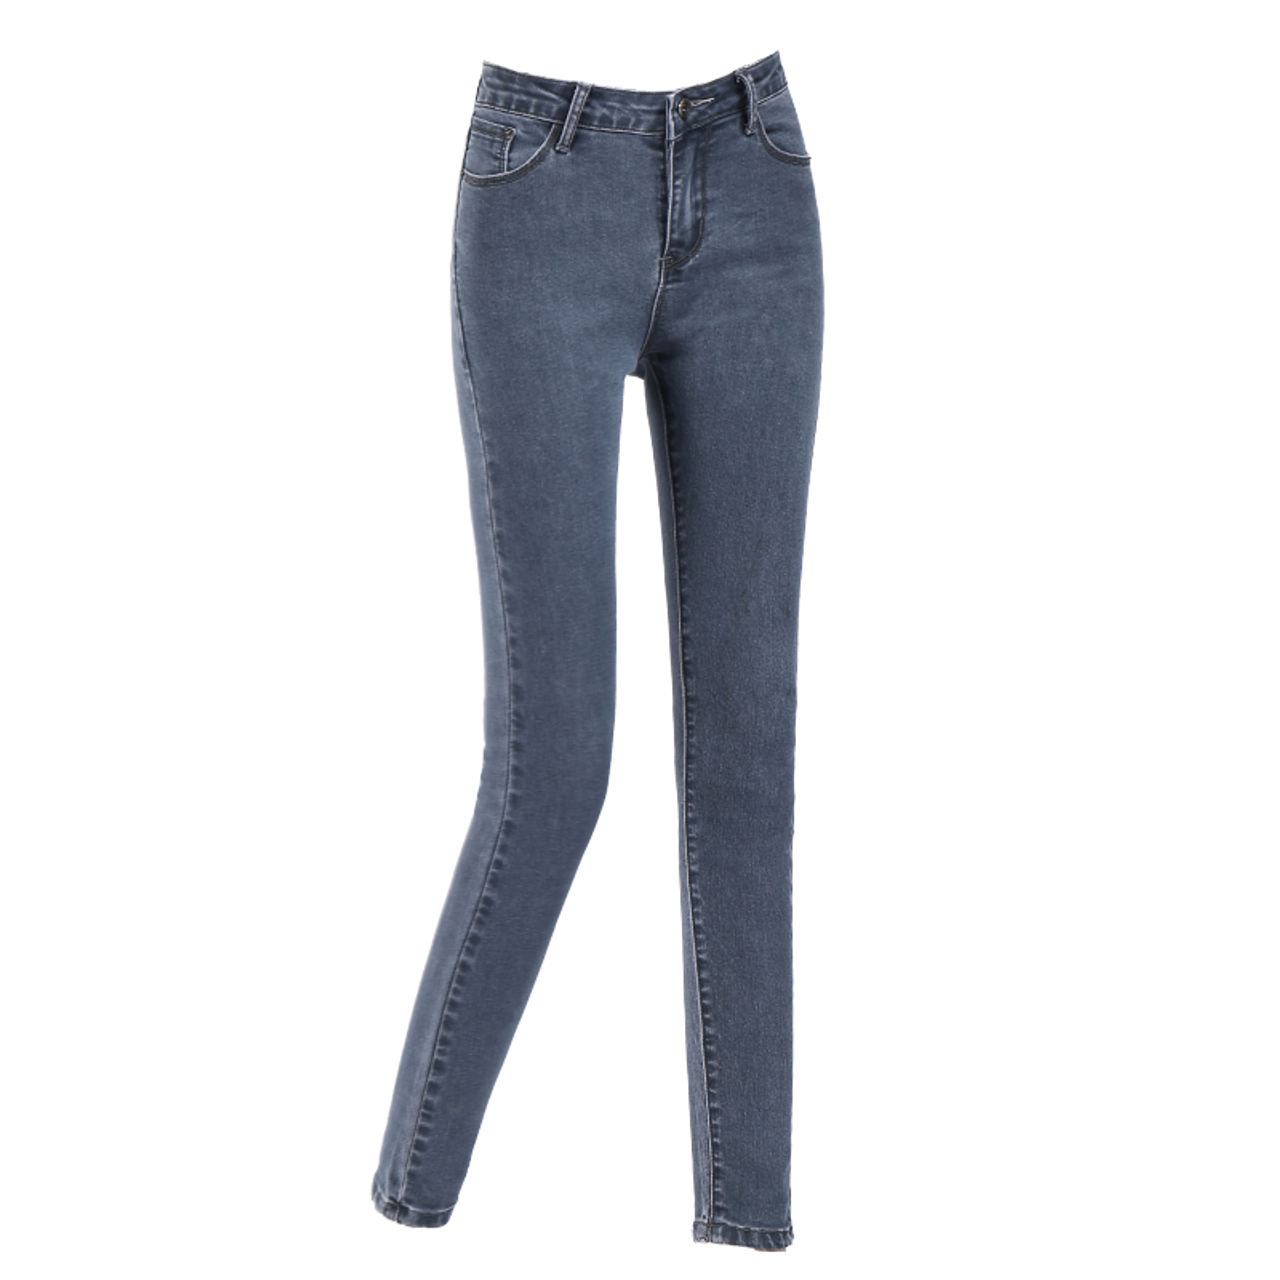 2017 New Fashion Jeans Women Pencil Pants High Waist Jeans Sexy Slim ...